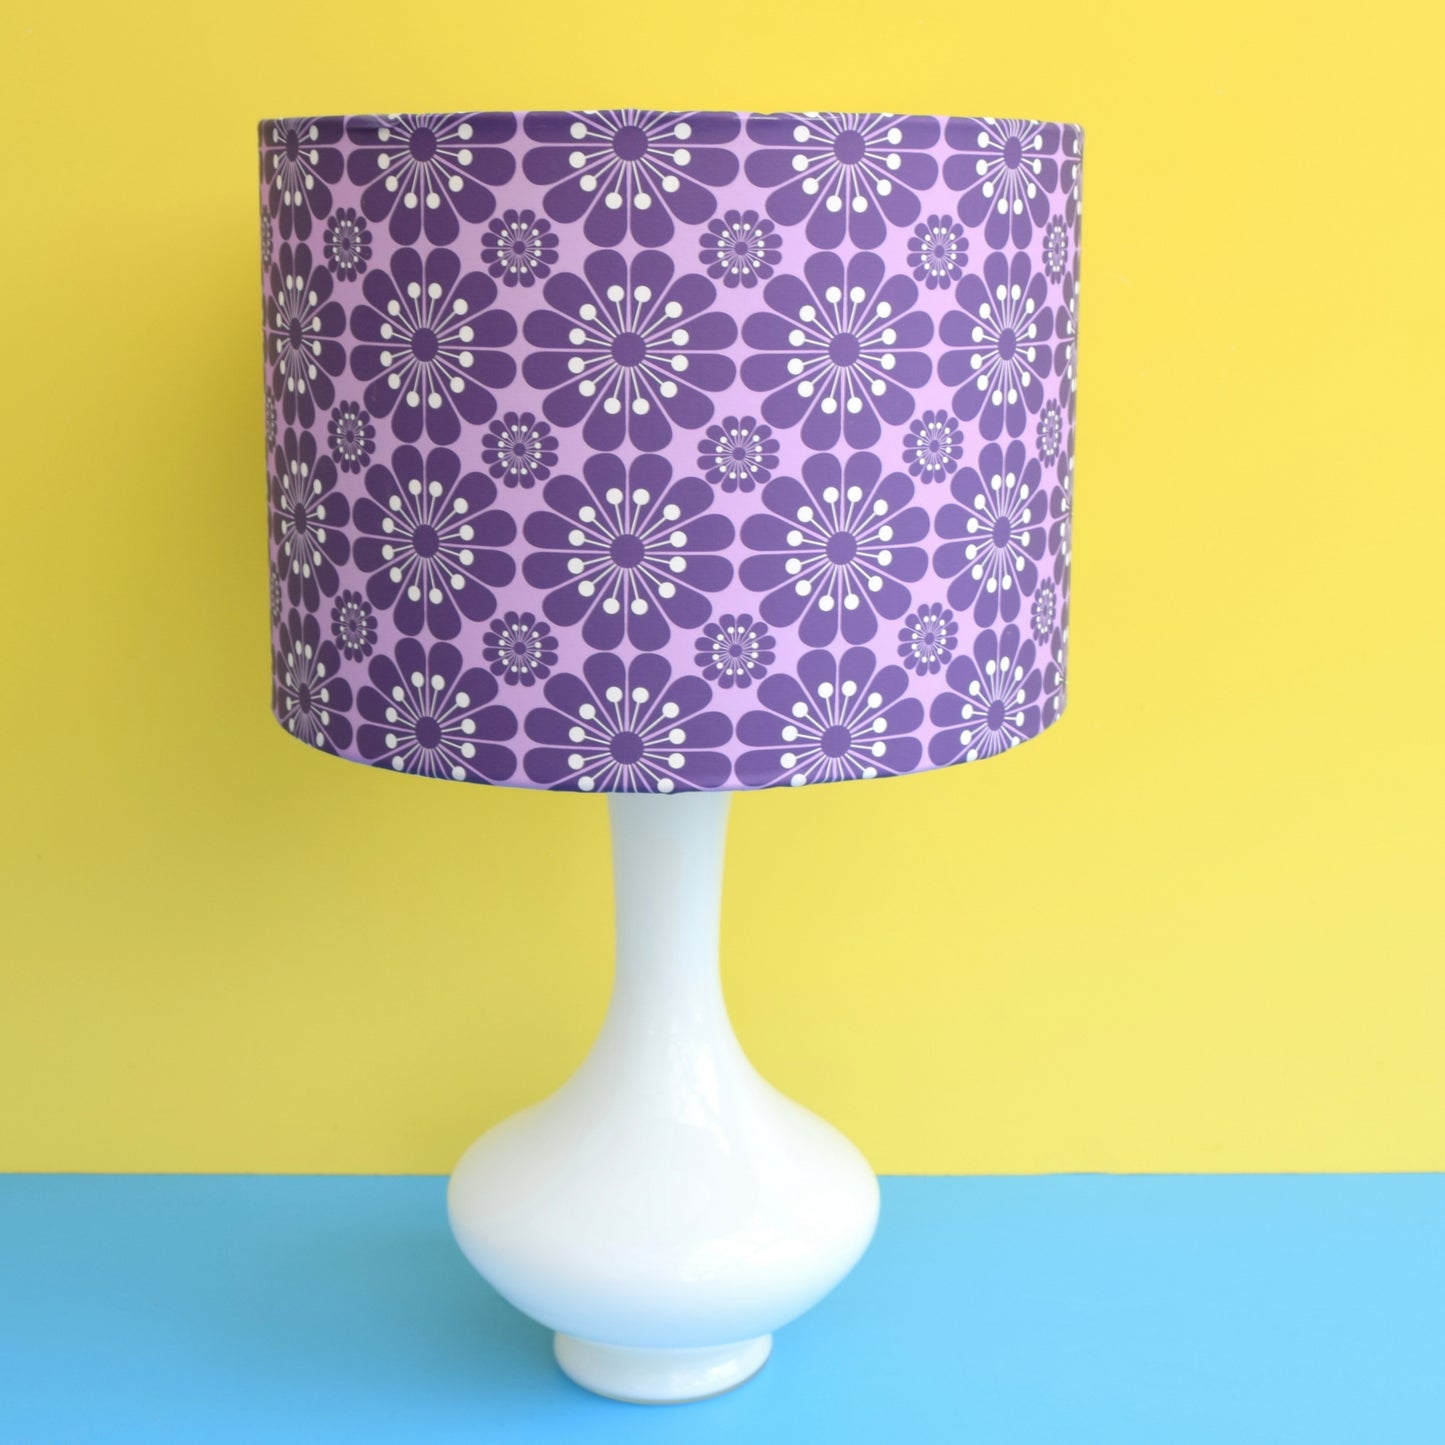 Vintage 1960s Glass Lamp & Flower Power Shade - Purple